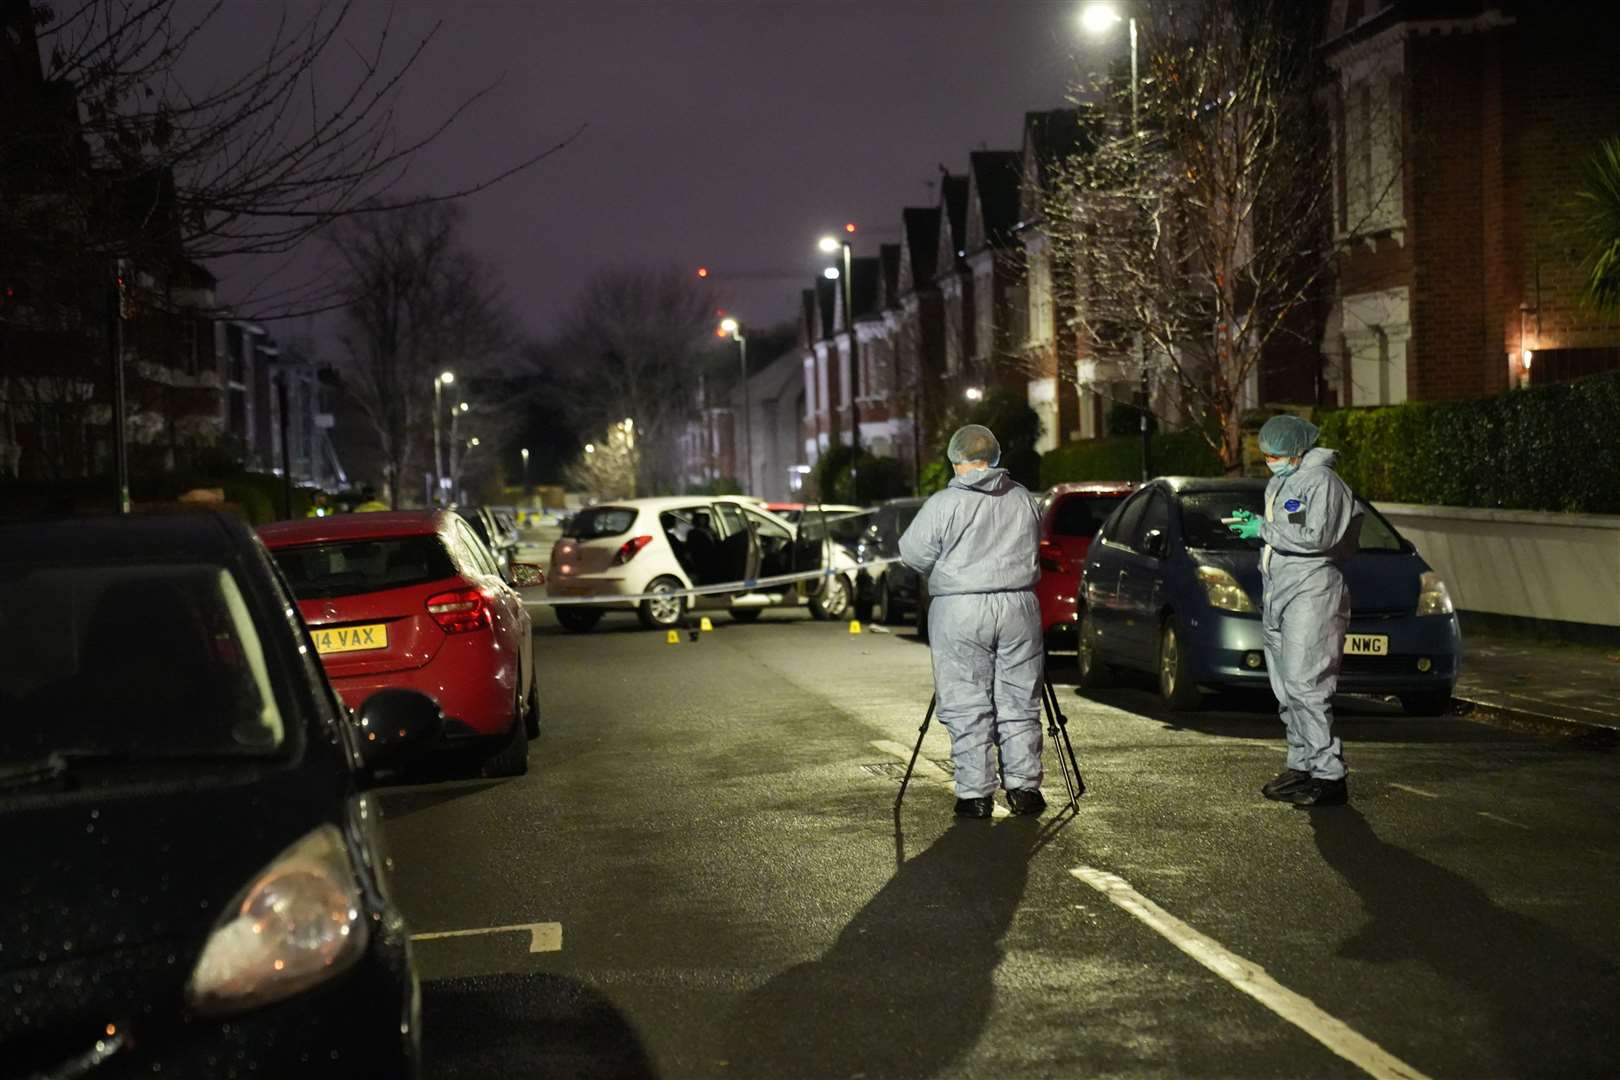 Police at the scene in Lessar Avenue near Clapham Common, south London. (Metropolitan Police/PA)